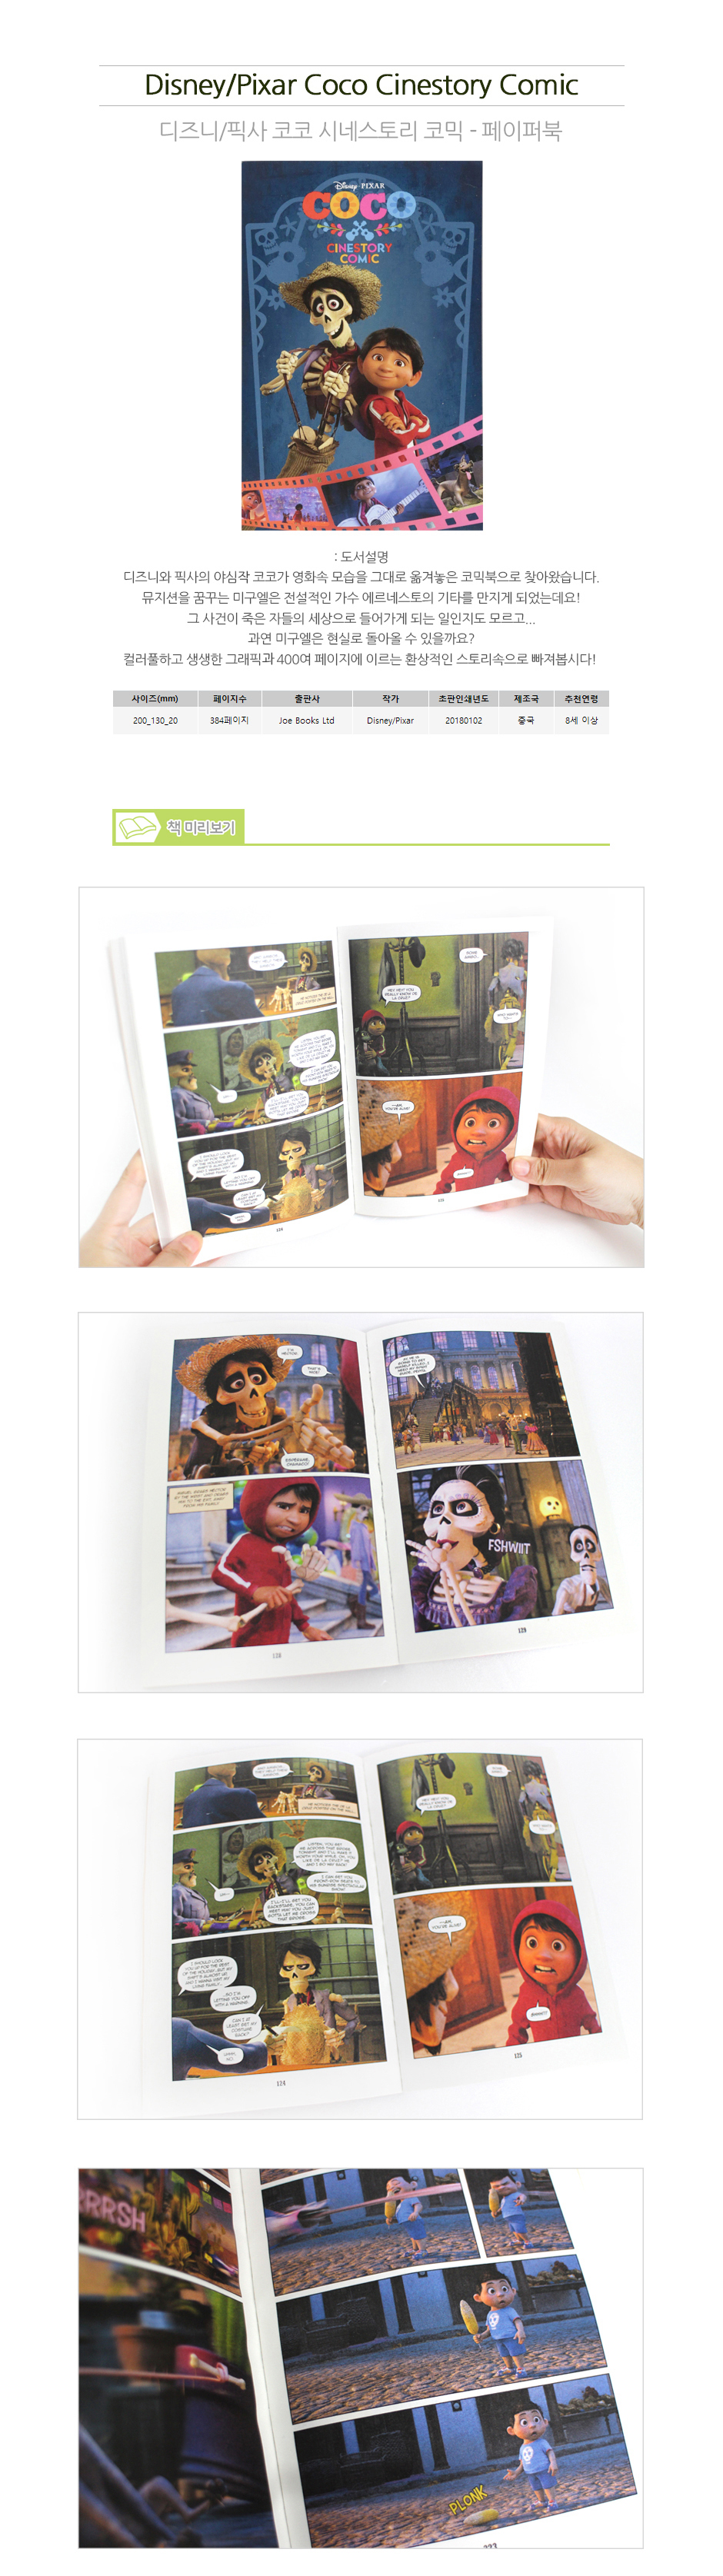 Disney/Pixar Coco Cinestory Comic (Disney/Pixar Cinestory Comic)